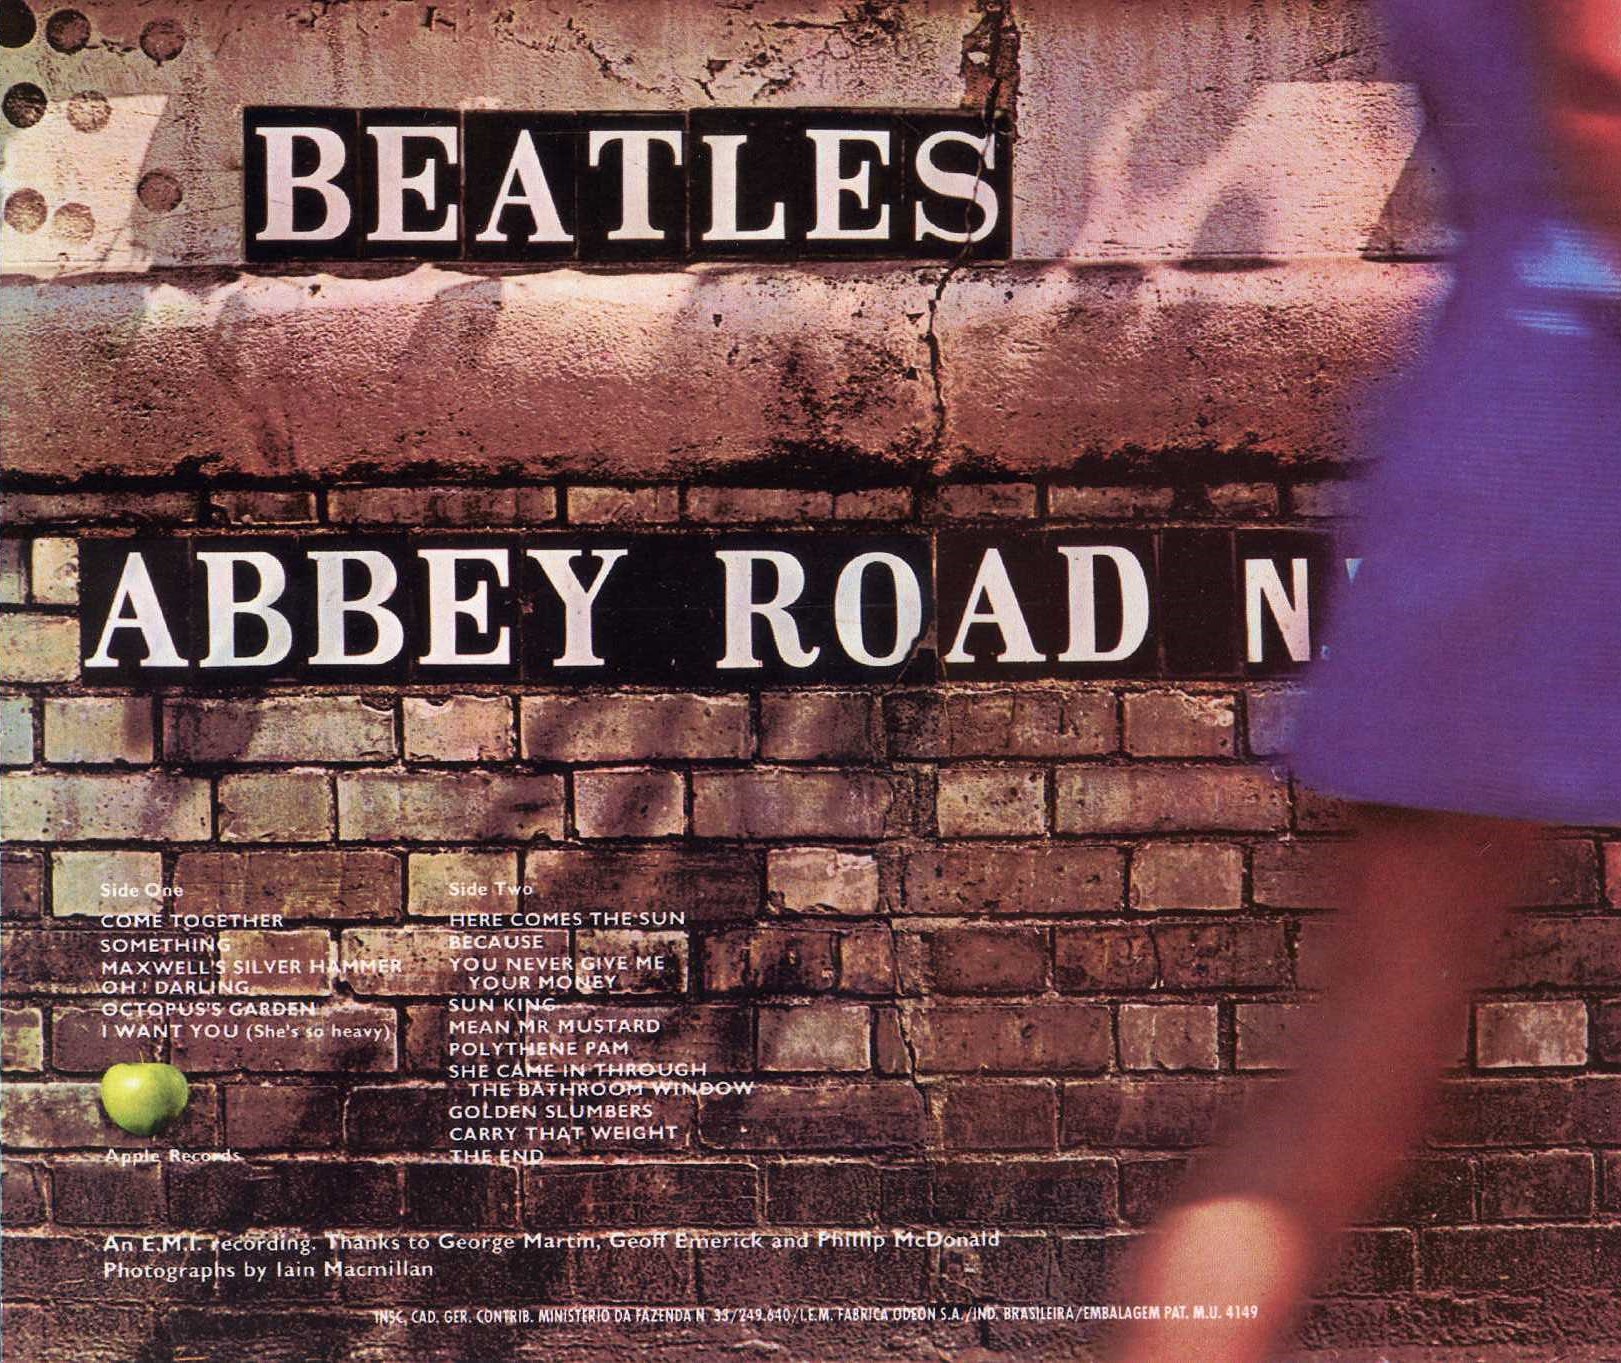 Cd roads. The Beatles "Abbey Road, CD". Abbey Road, 1969. Abbey Road 1969 обложка. Битлз Эбби роуд обложка.